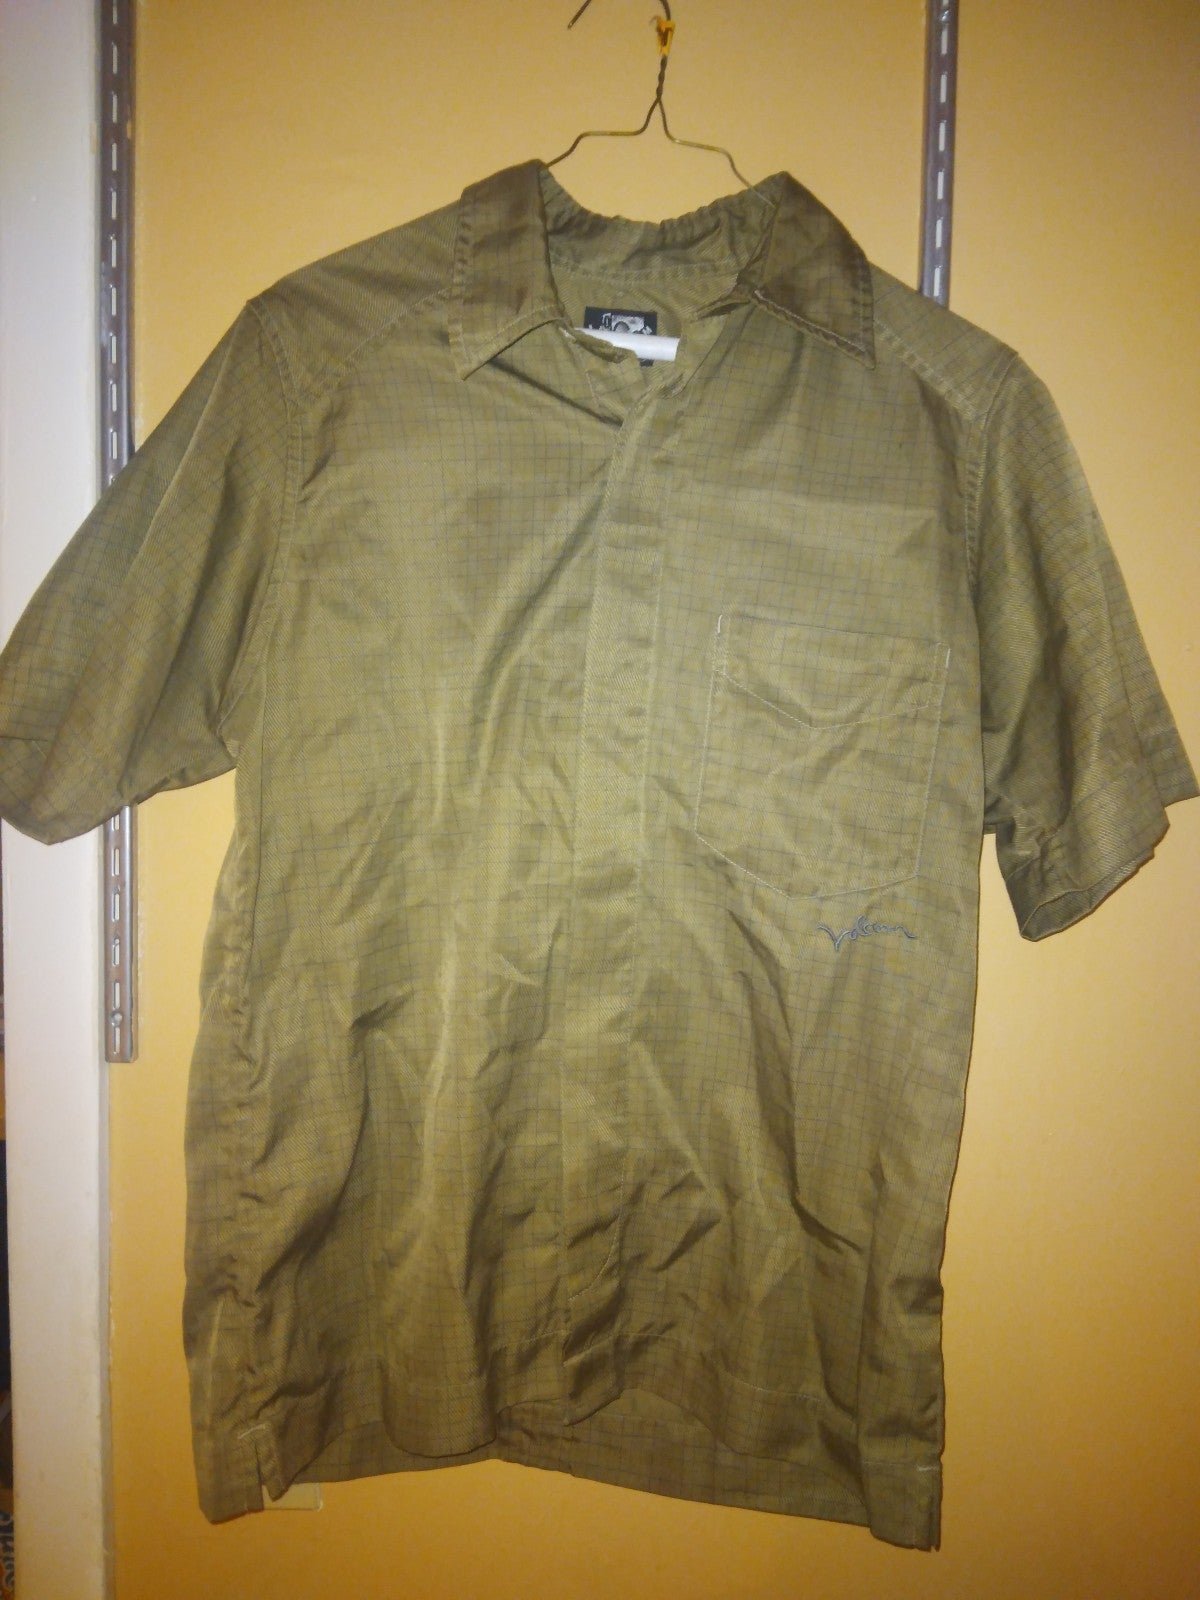 Wholesale price Vicom brand olive color shirt LH7Ghs8iz well sale